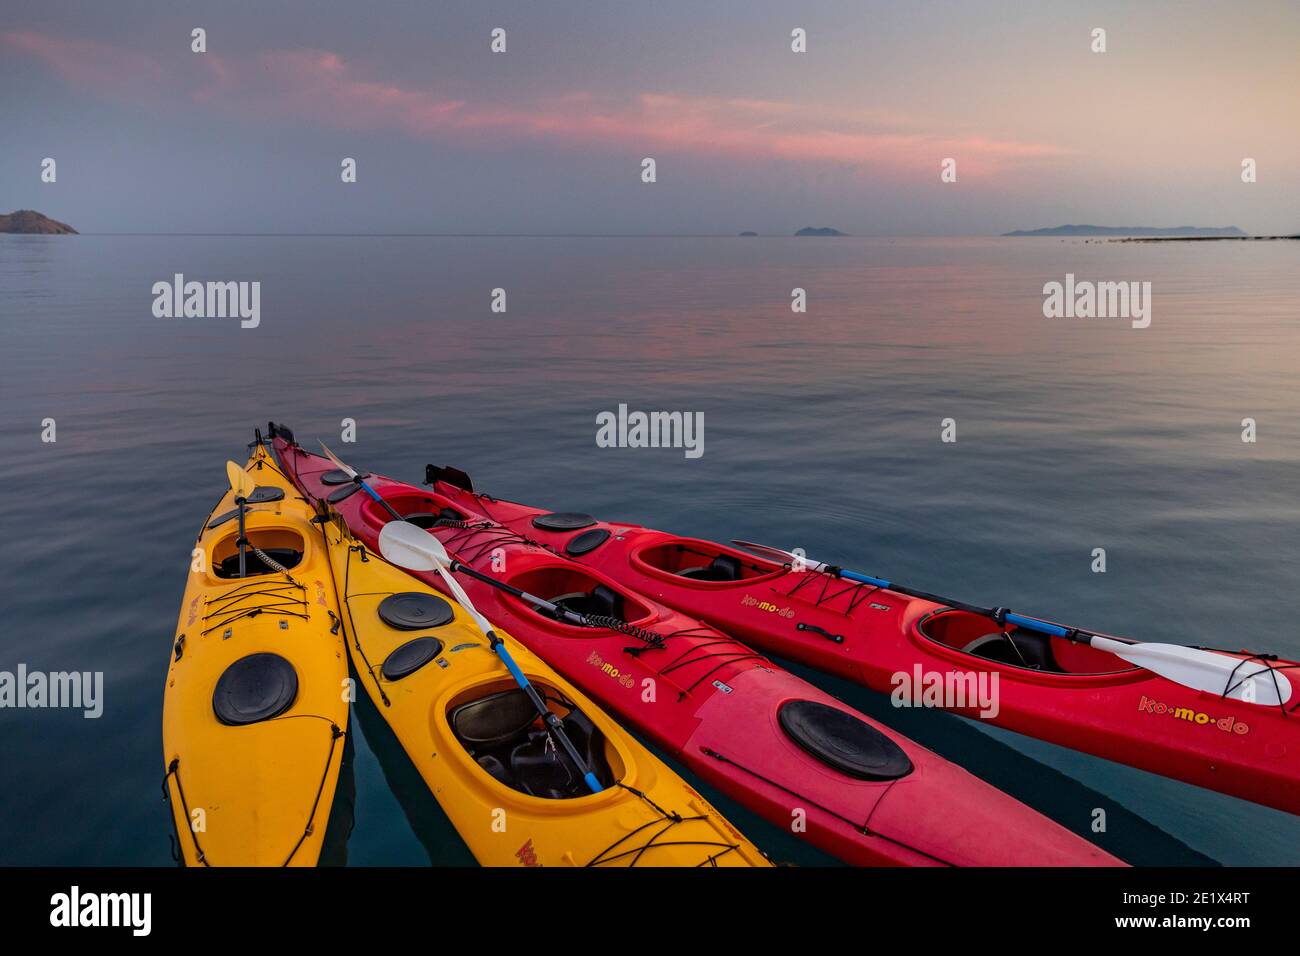 Komodo, Indonesia: Novembre 12,2019: Kayak colorati legati insieme sull'oceano al tramonto Foto Stock